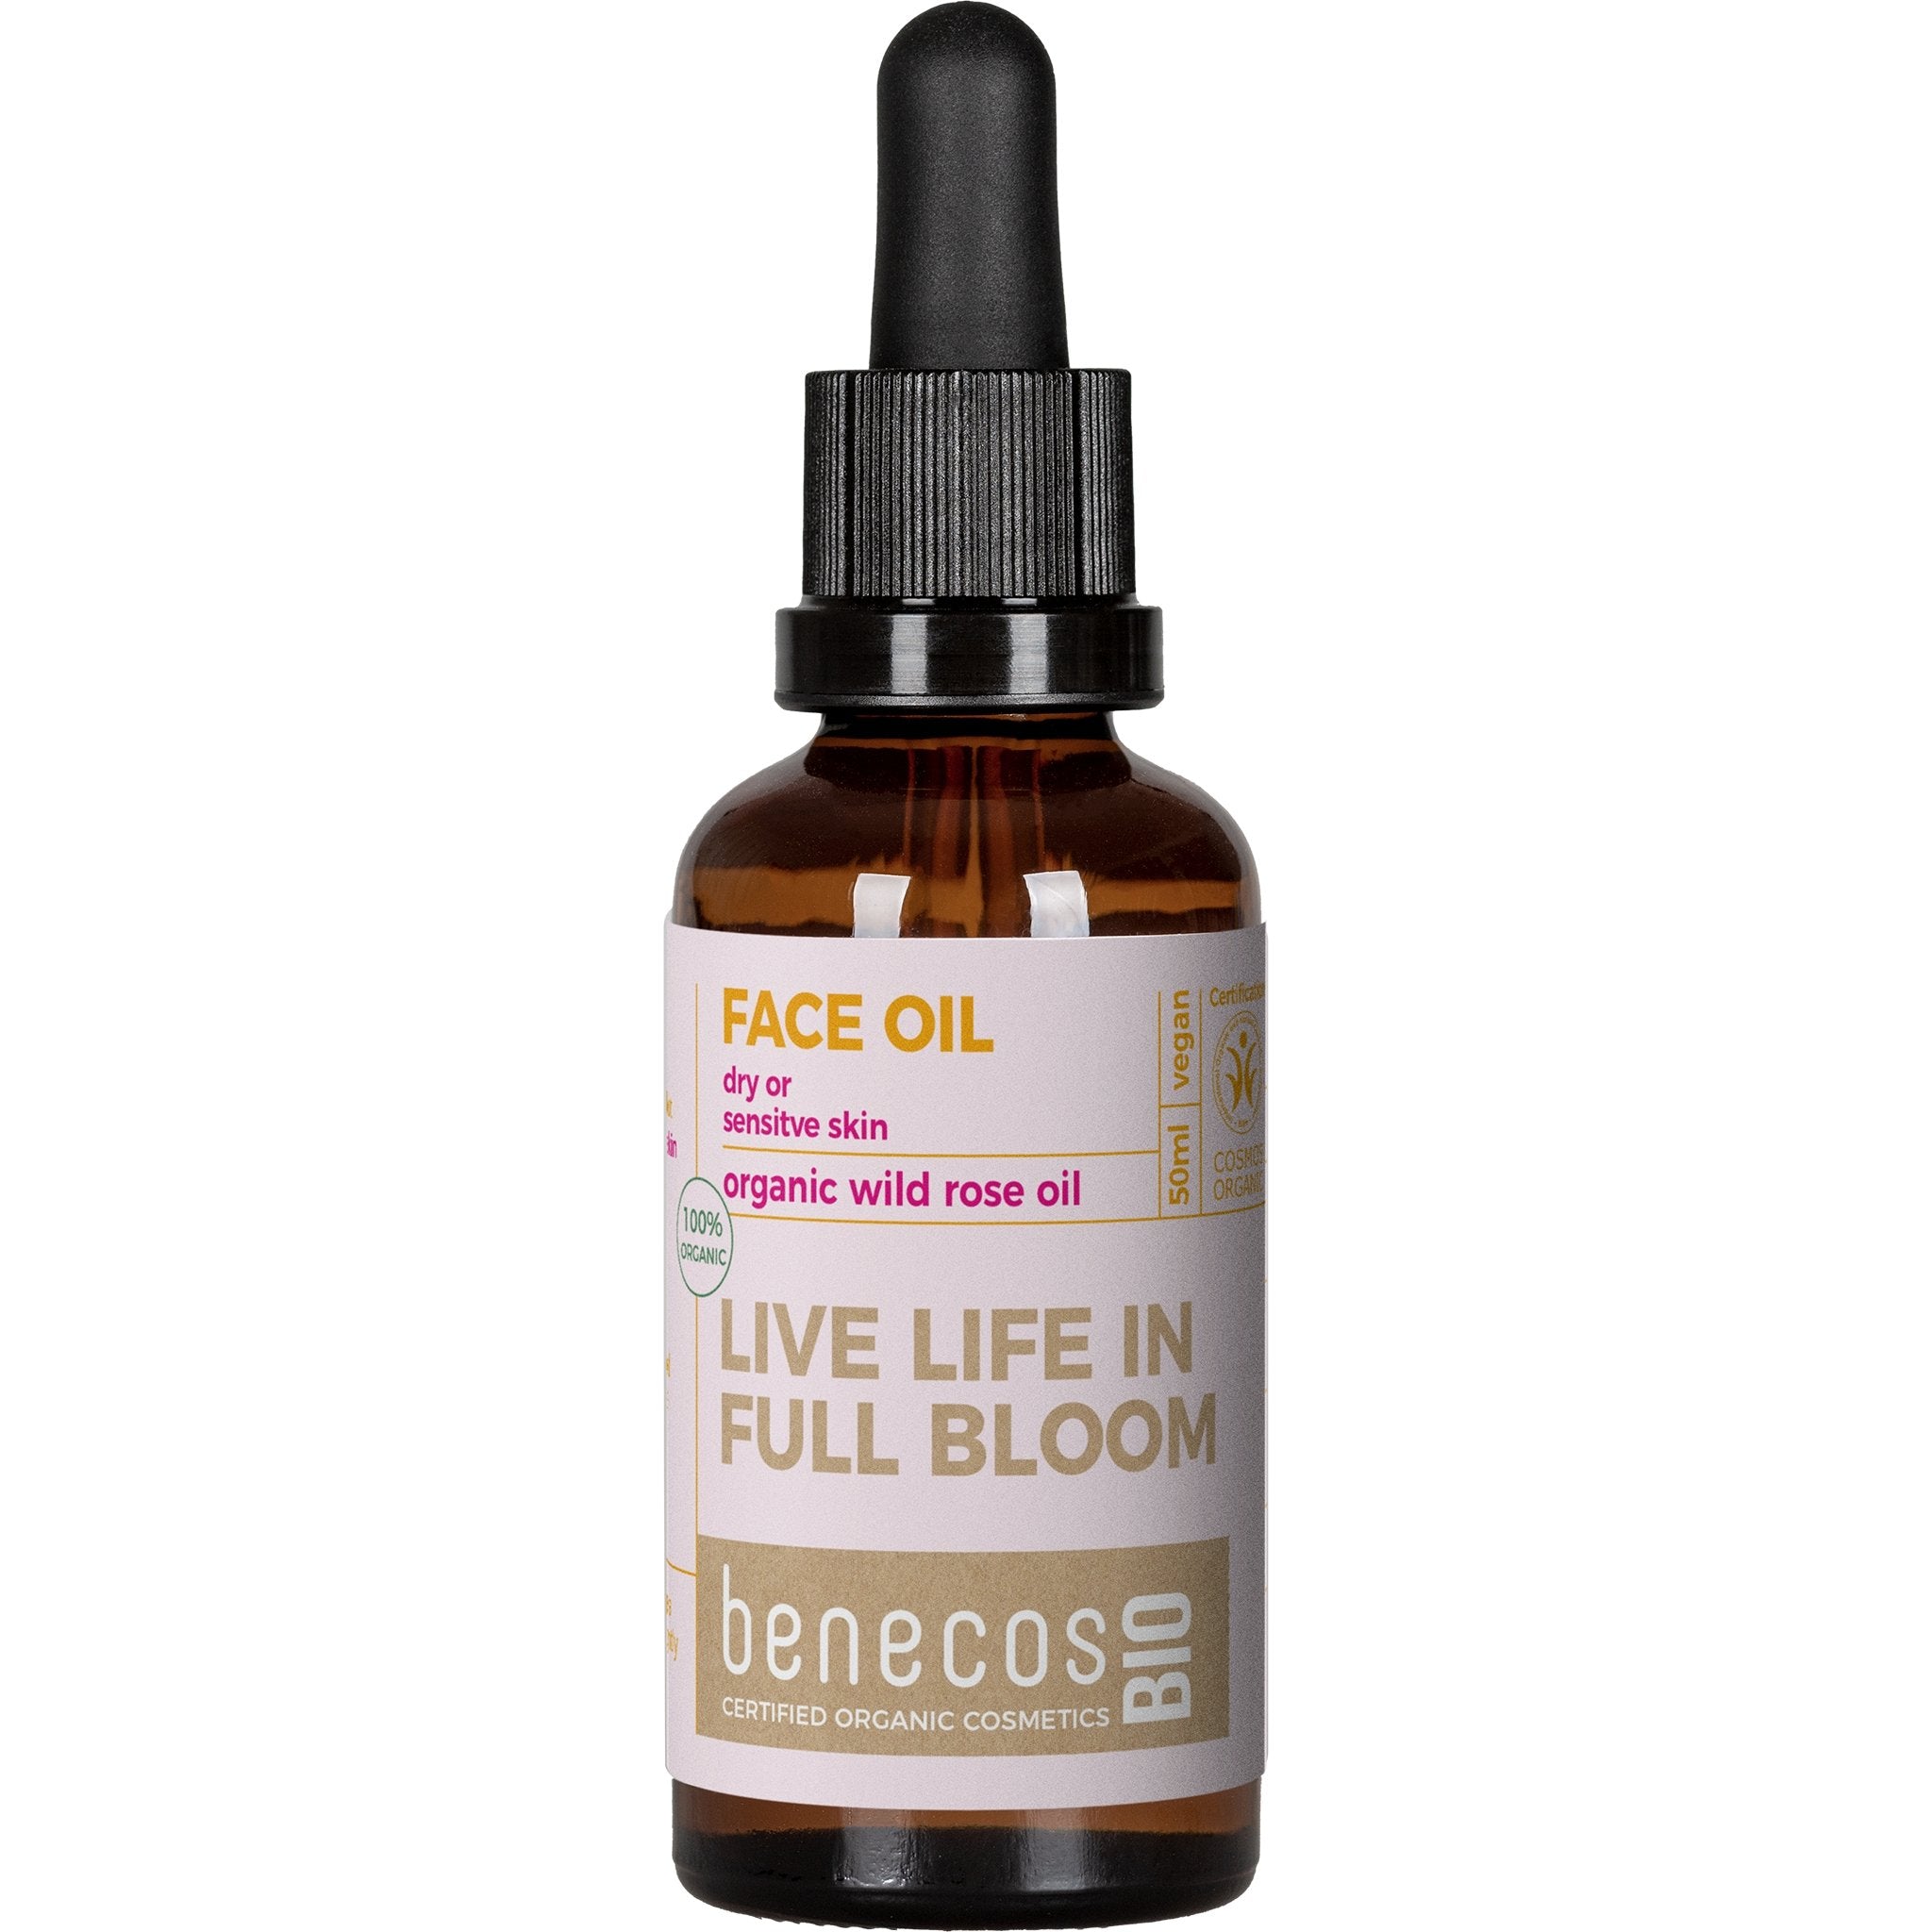 NEW Live Life In Full Bloom - Organic Wild Rose Face Oil - mypure.co.uk